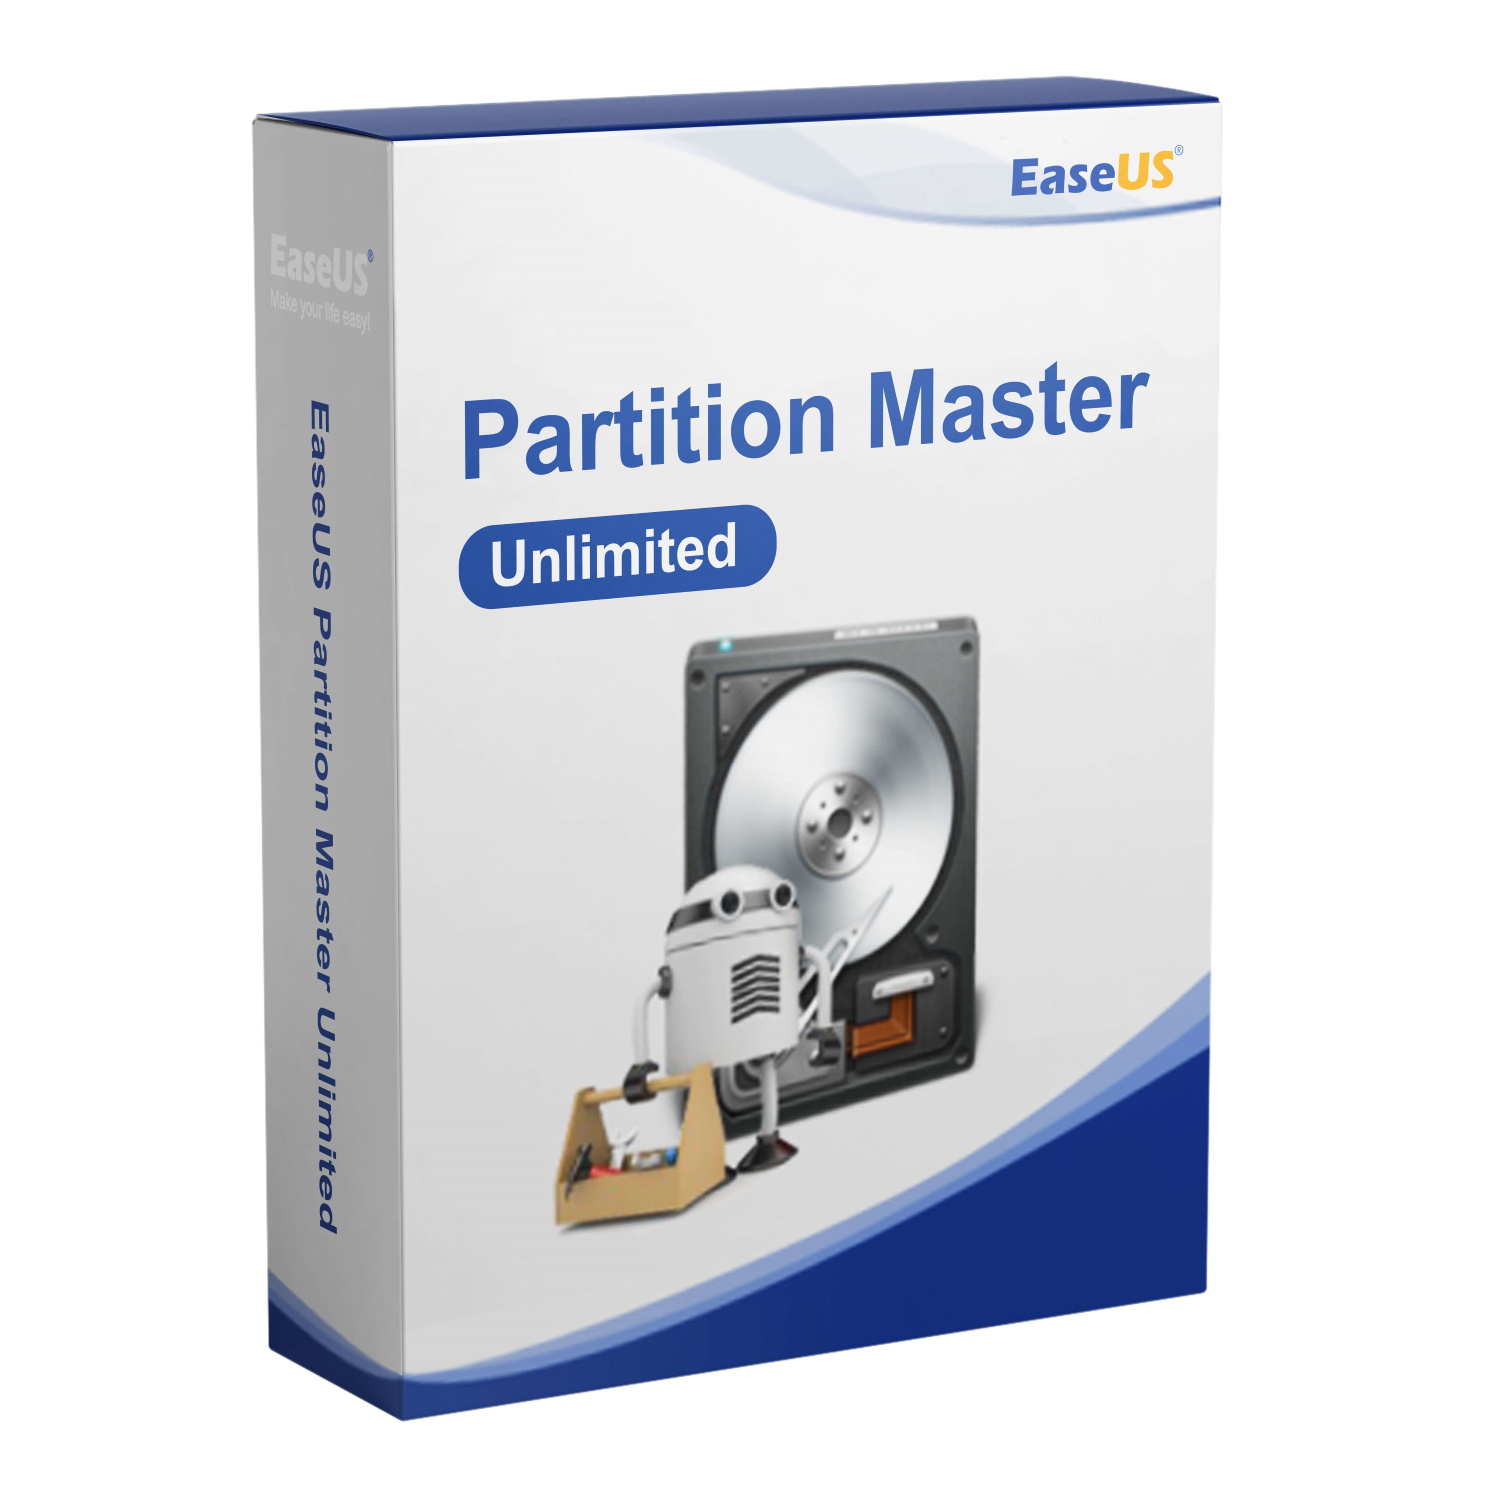 EaseUS Partition Master Unlimited Permanente (solo version actual)